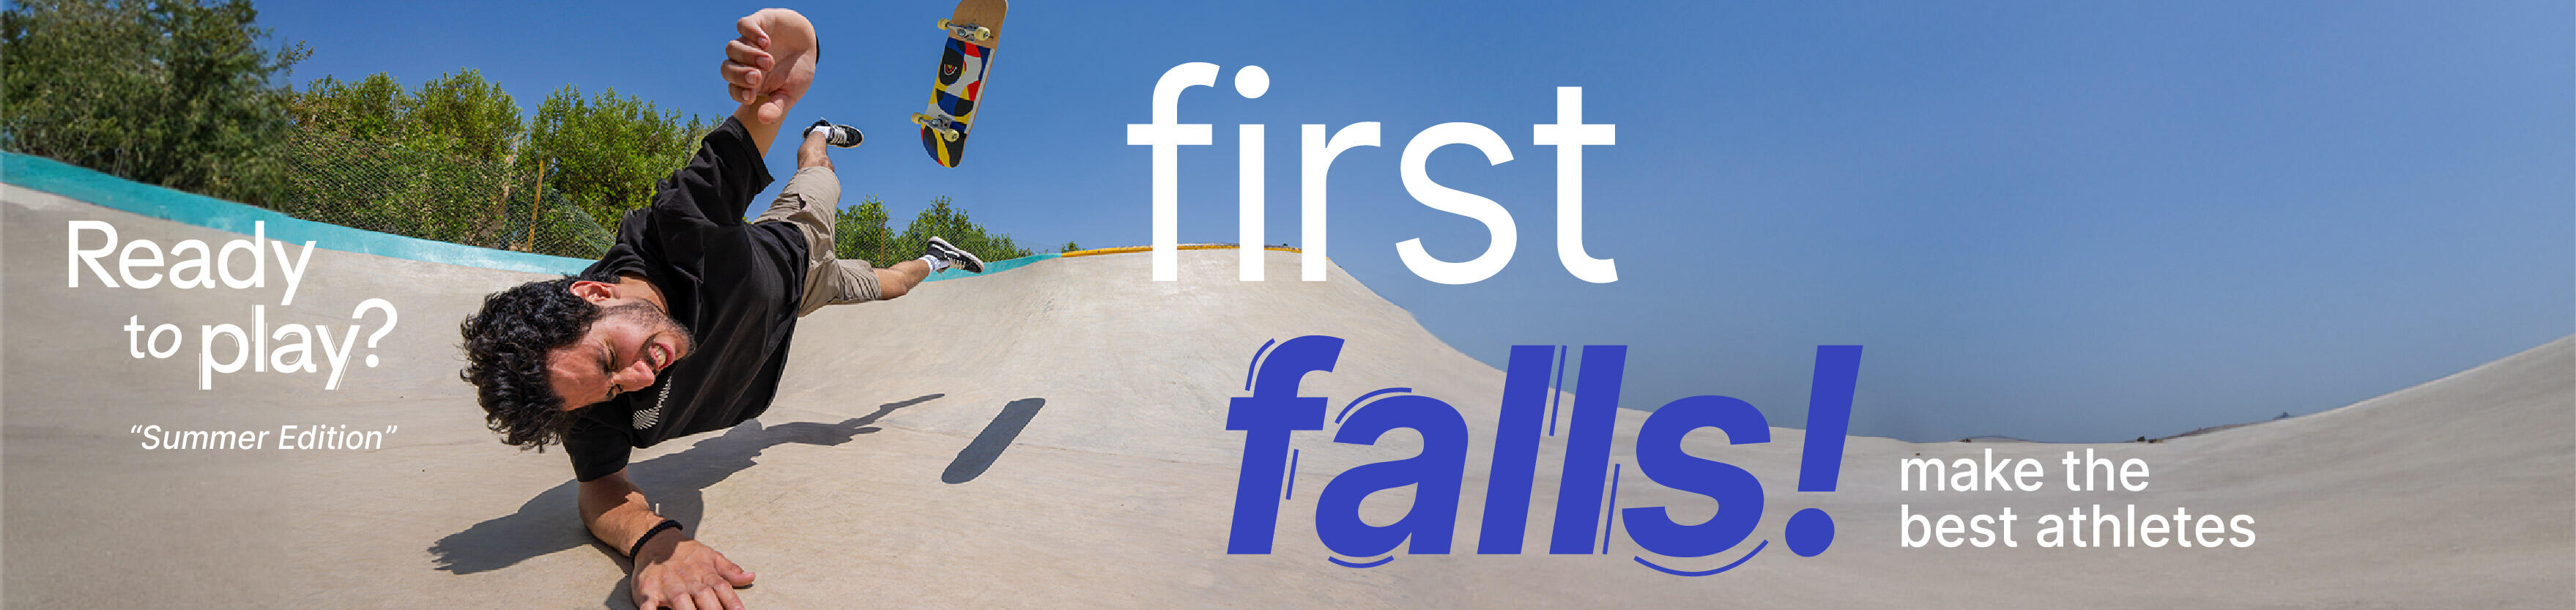 First falls skateboard